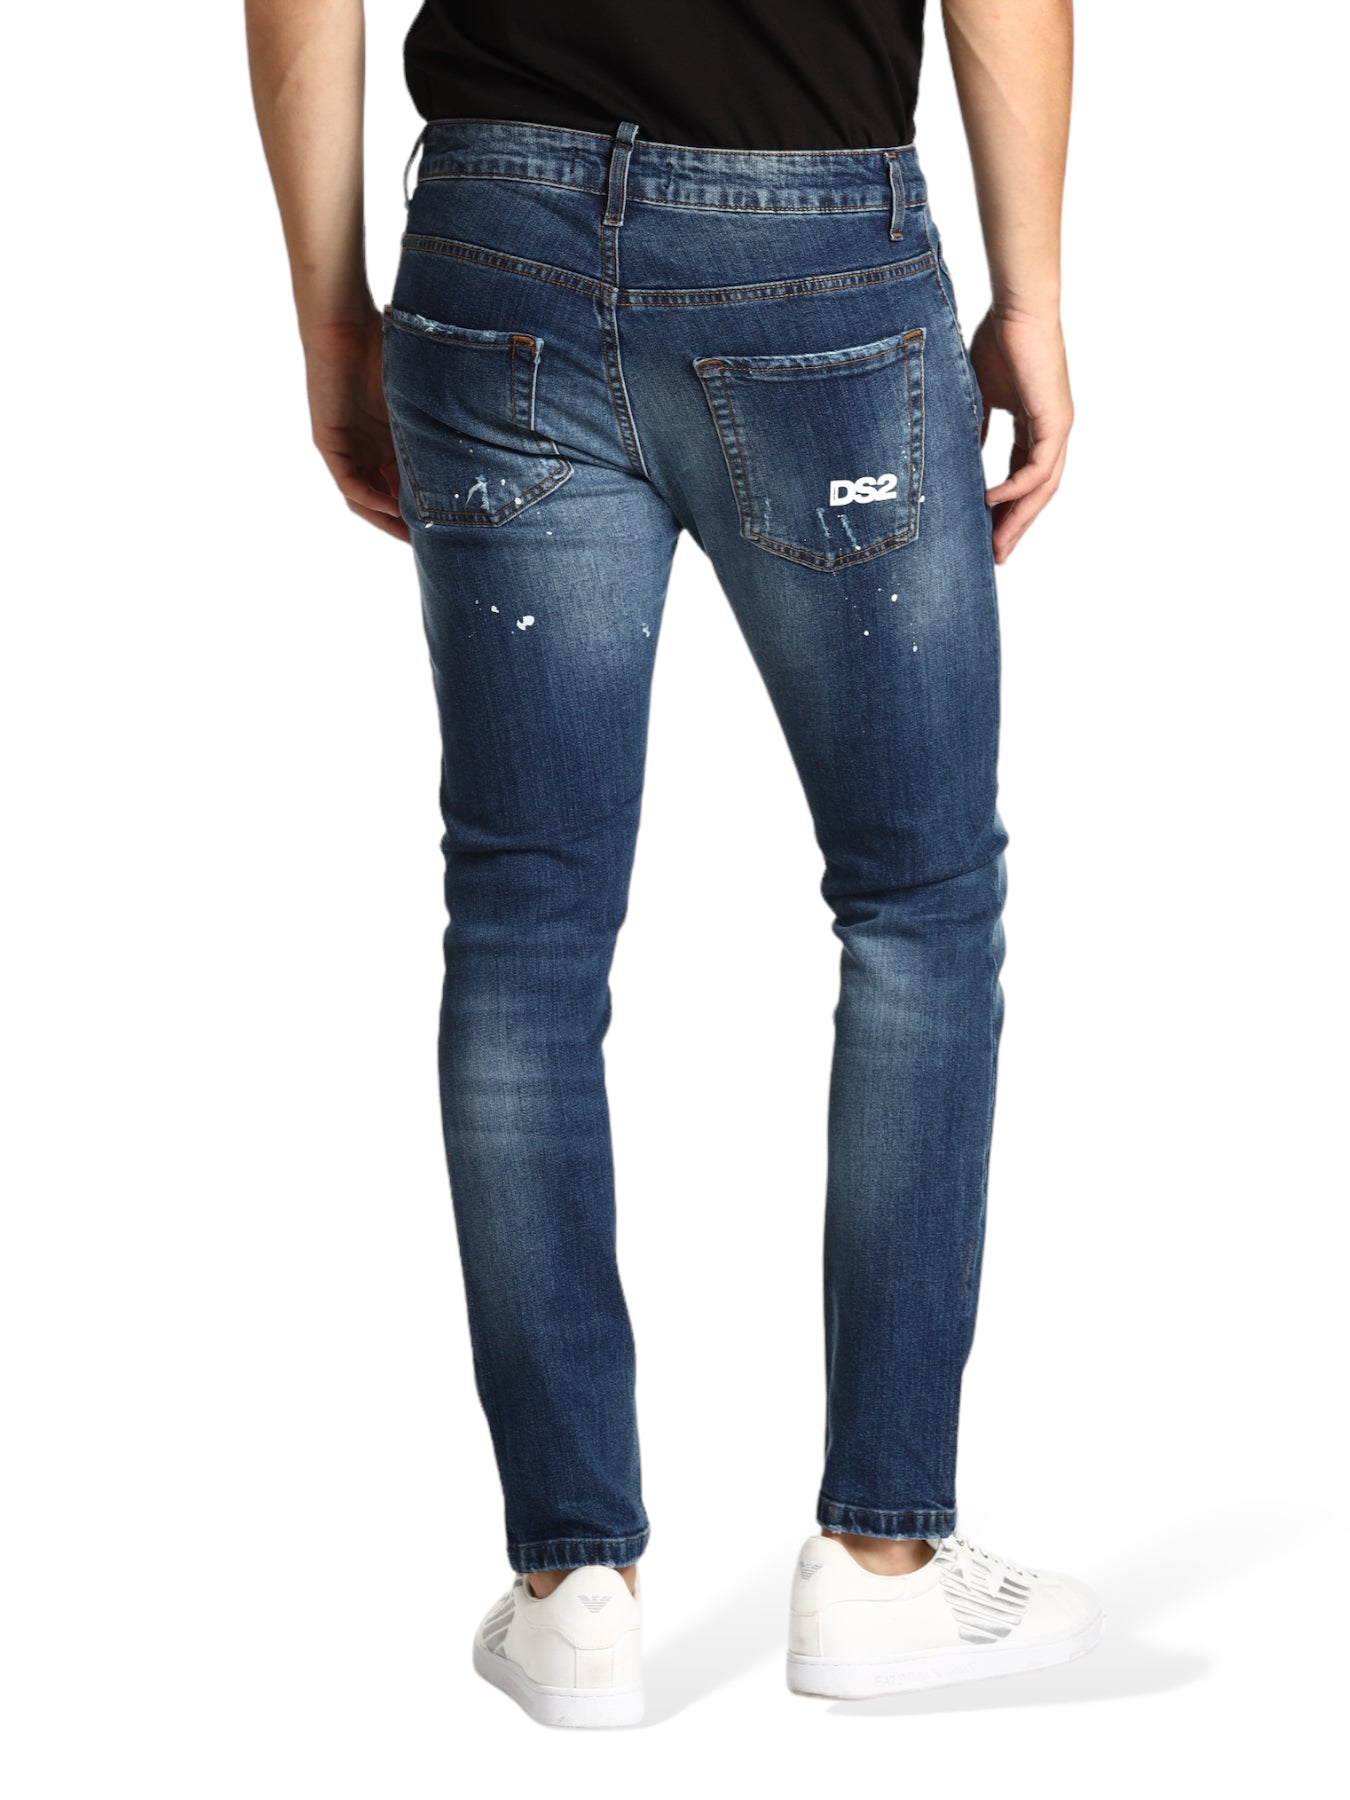 Jeans Fw23210 Denim